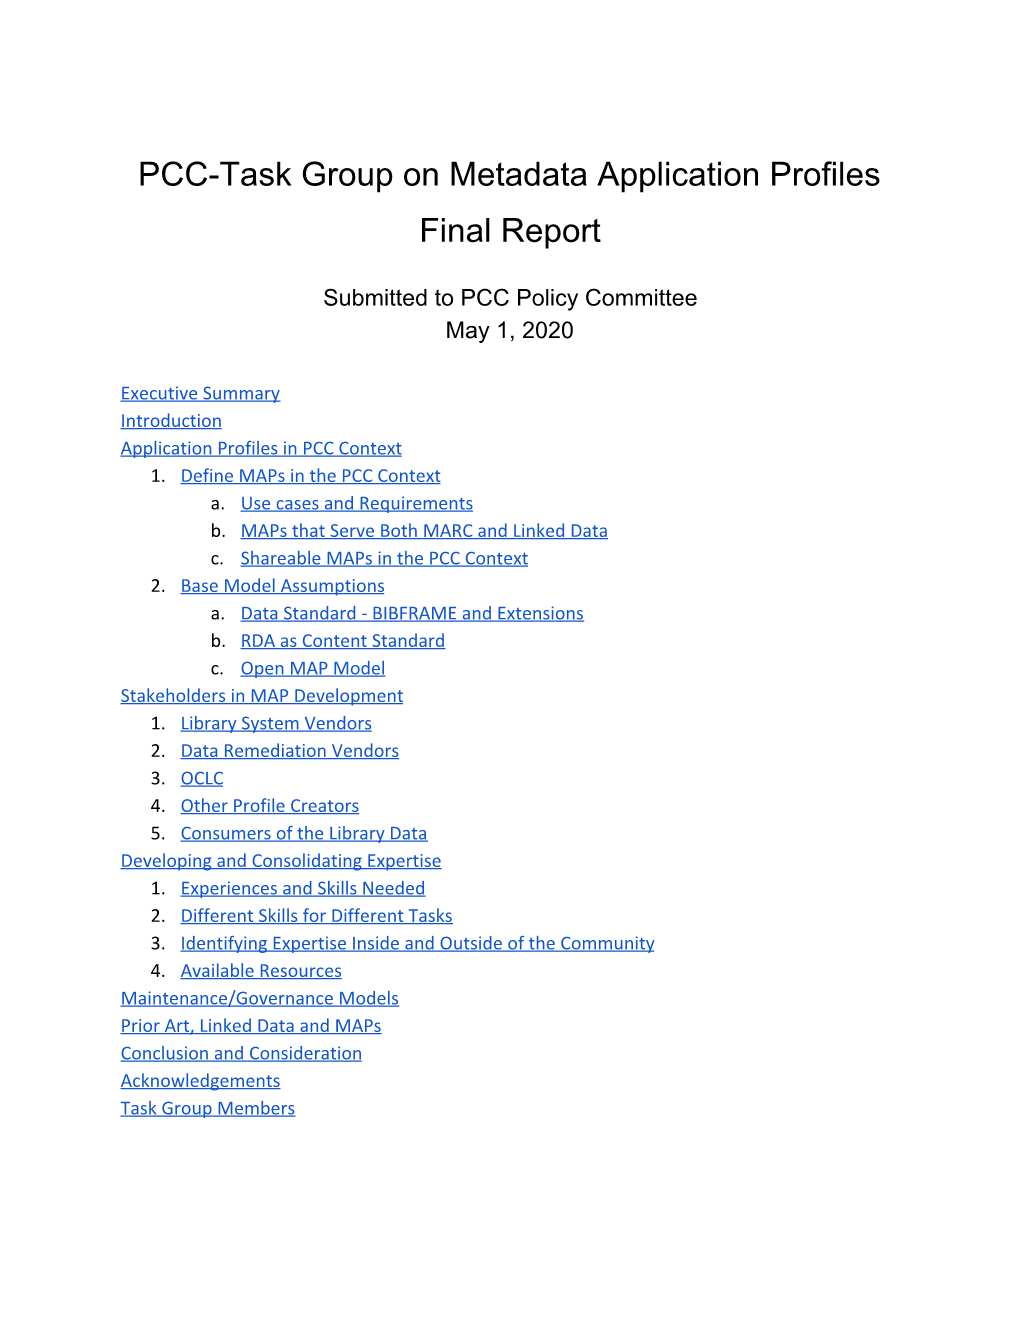 PCC-Task Group on Metadata Application Profiles Final Report